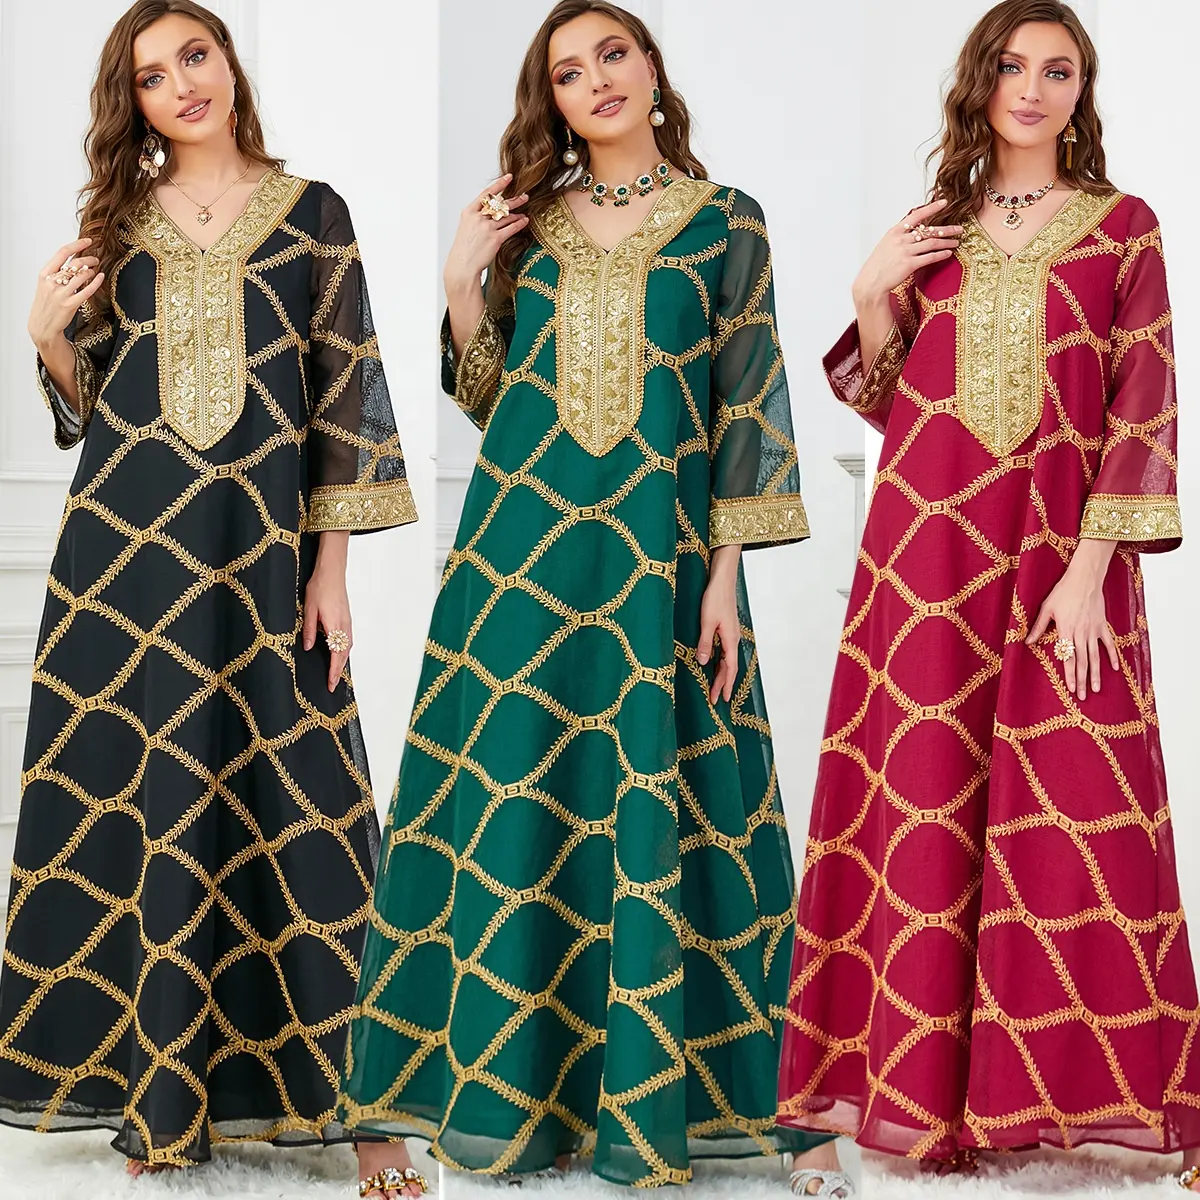 Robes Abaya Maxi Malaisie Robe Musulmane Abaya Femmes Femmes Hommes Africains Vêtements Femmes Robe Musulmane Abaya